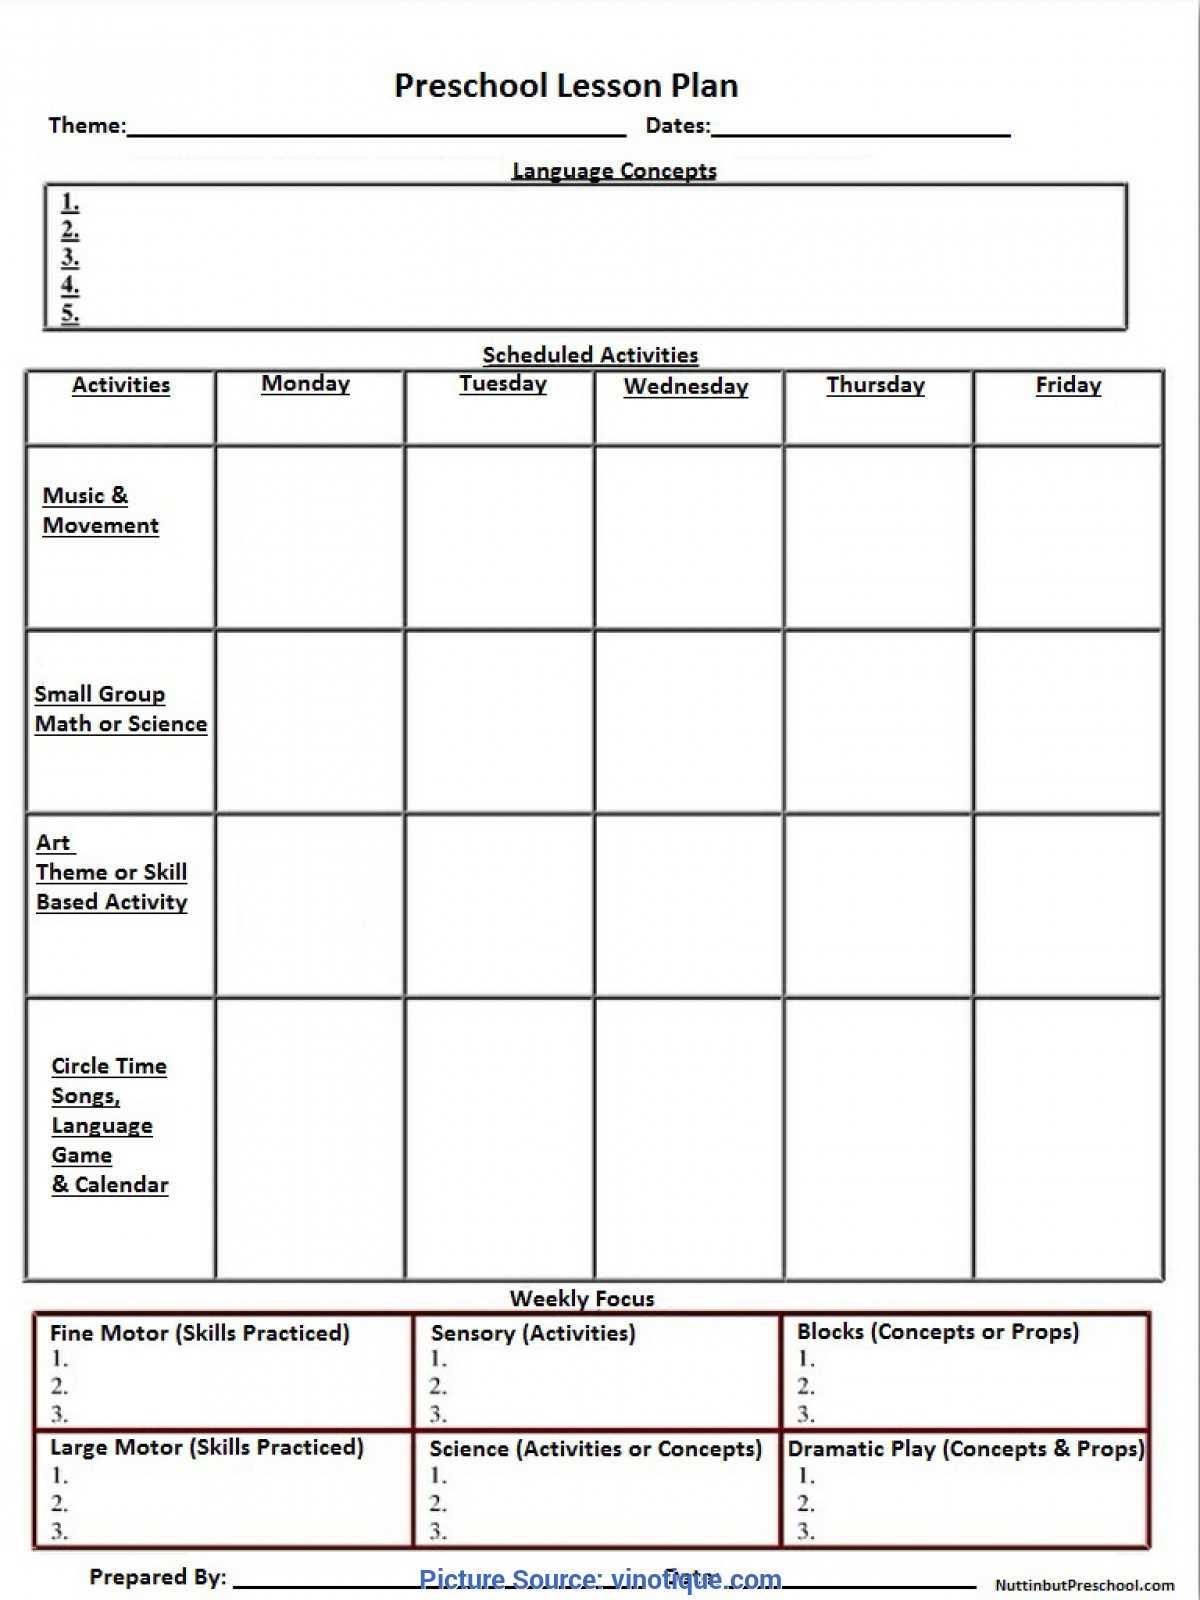 Valuable Teacher Plan Book Template Word 56 Teacher Plan For Teacher Plan Book Template Word